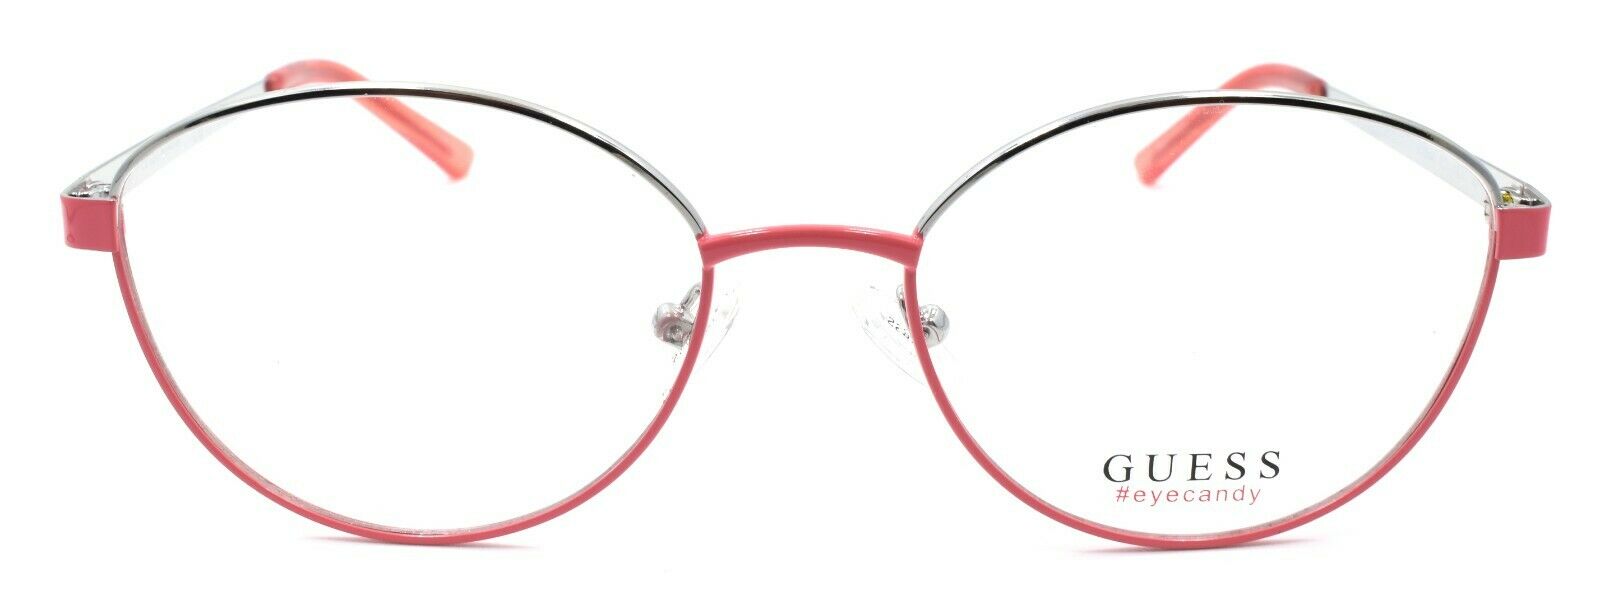 2-GUESS GU3043 072 Eye Candy Women's Eyeglasses Frames 51-17-140 Shiny Pink-889214044624-IKSpecs